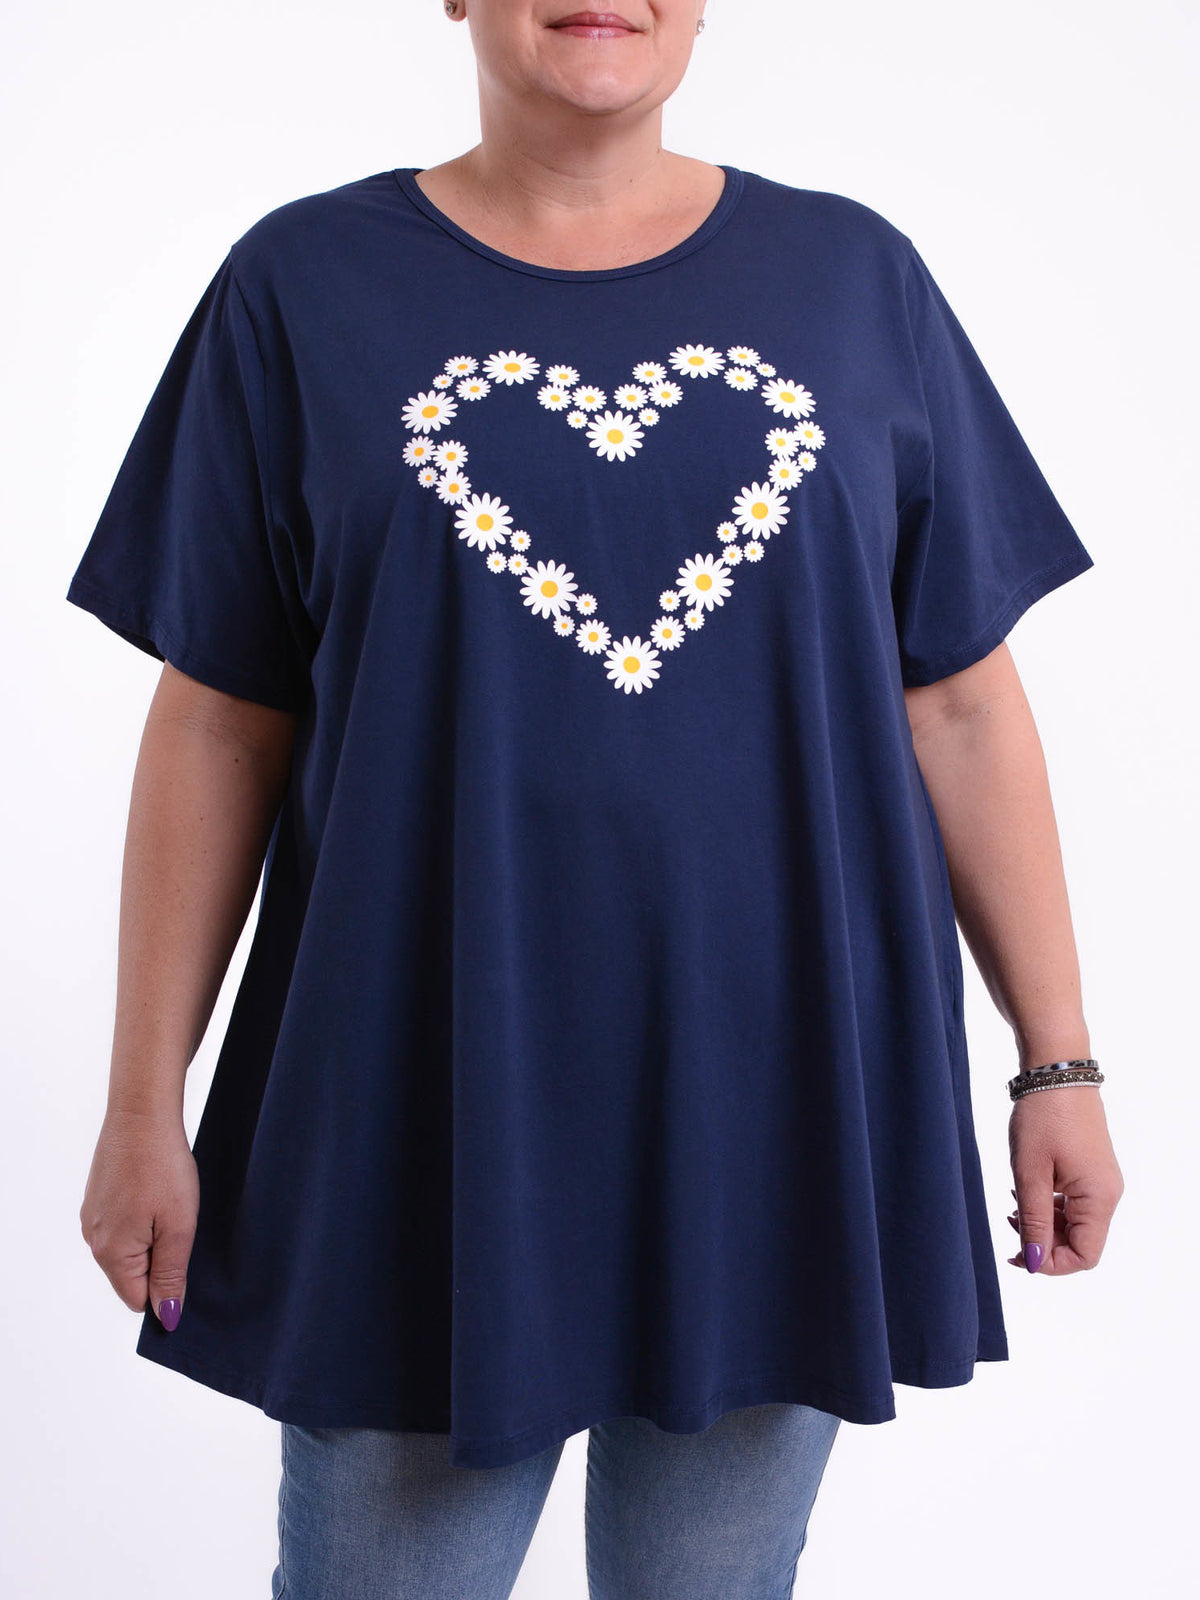 Basic Cotton Swing T Shirt - Round Neck 10516 DAISY HEART, Tops & Shirts, Pure Plus Clothing, Lagenlook Clothing, Plus Size Fashion, Over 50 Fashion